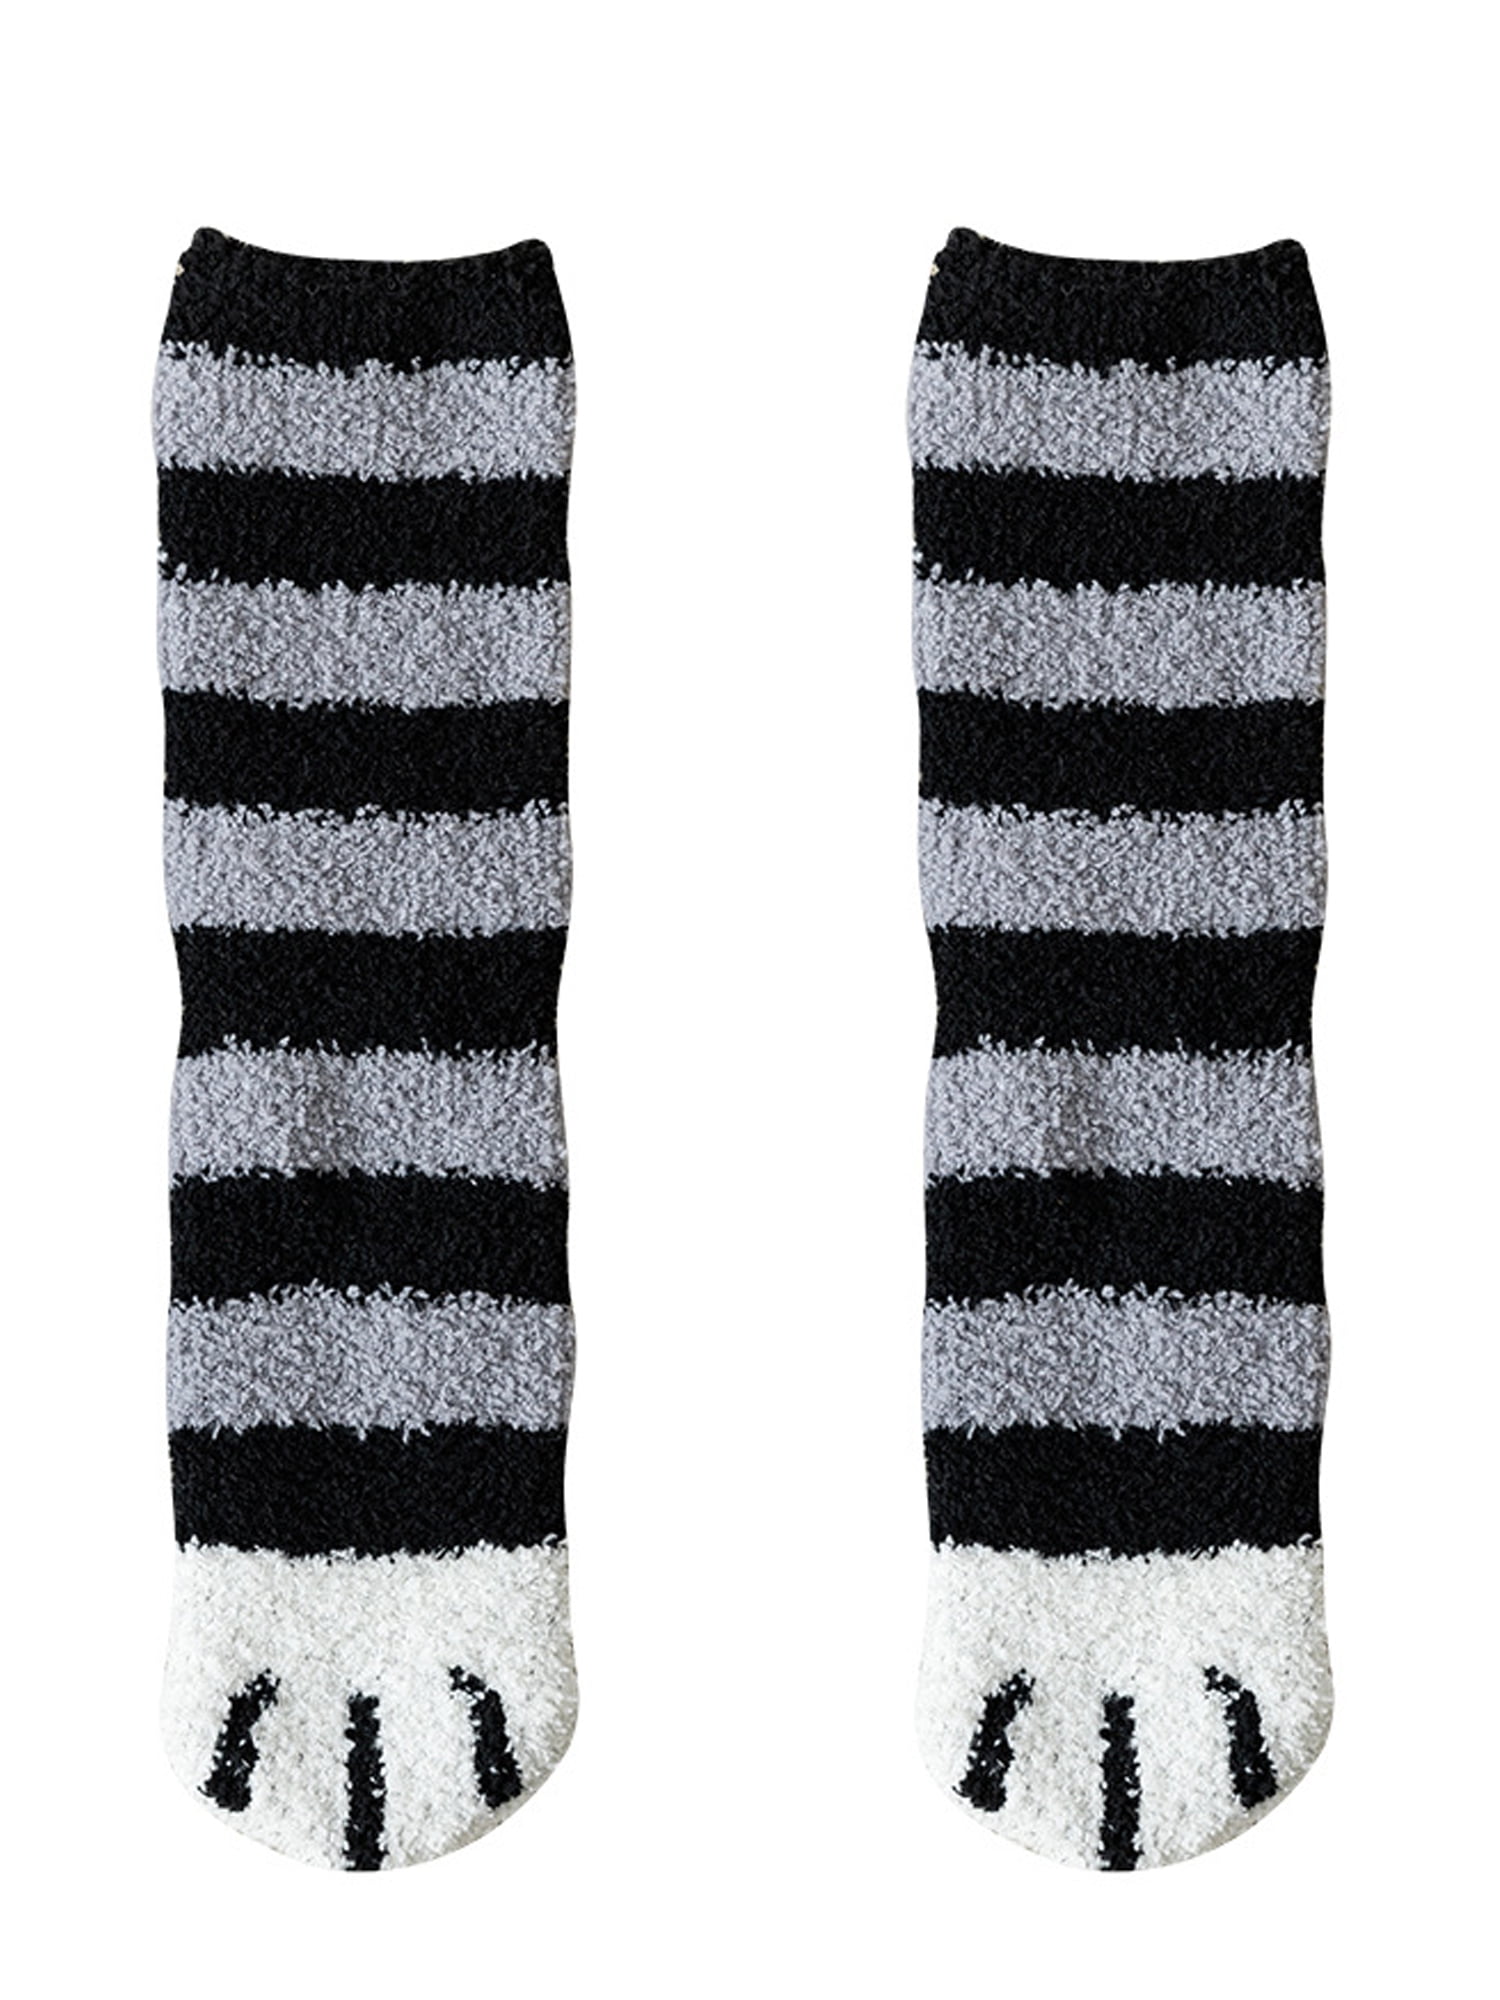 Ladies Women Luxury Designed Ankle Cozy Socks Fluffy Wintery Bed Soft UK 4-8 